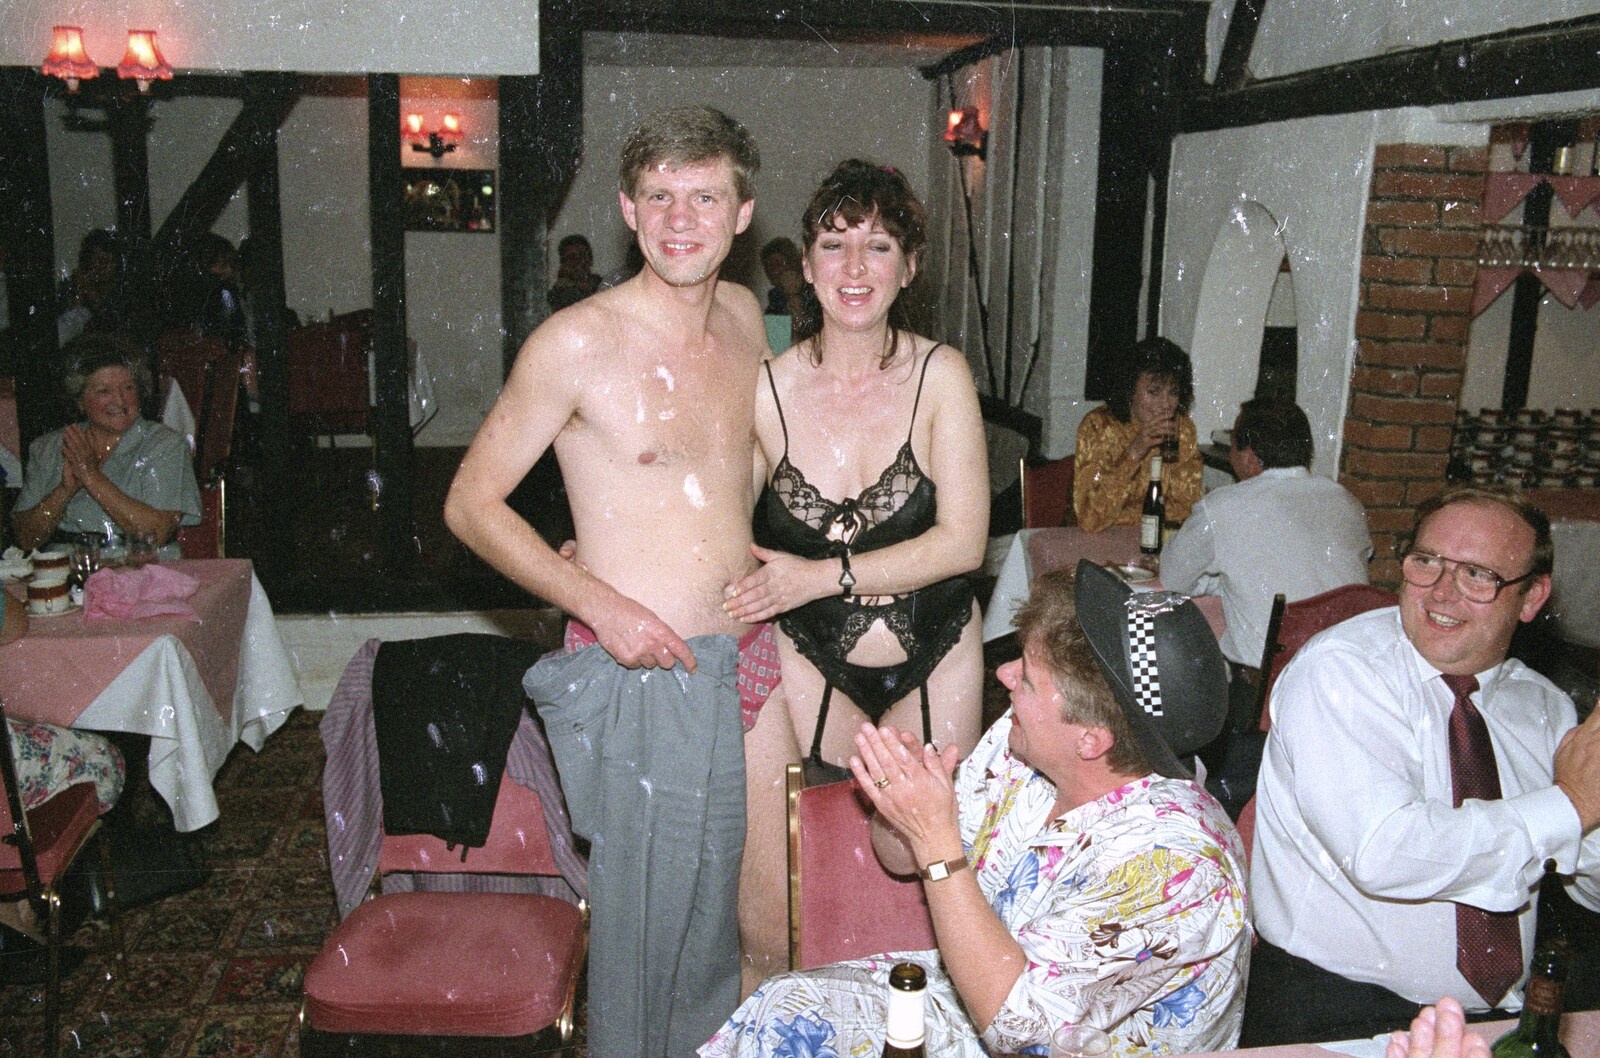 Steve-o covers up his pants from Printec and Steve-O's Pants, The Swan, Harleston, Norfolk - 19th May 1990